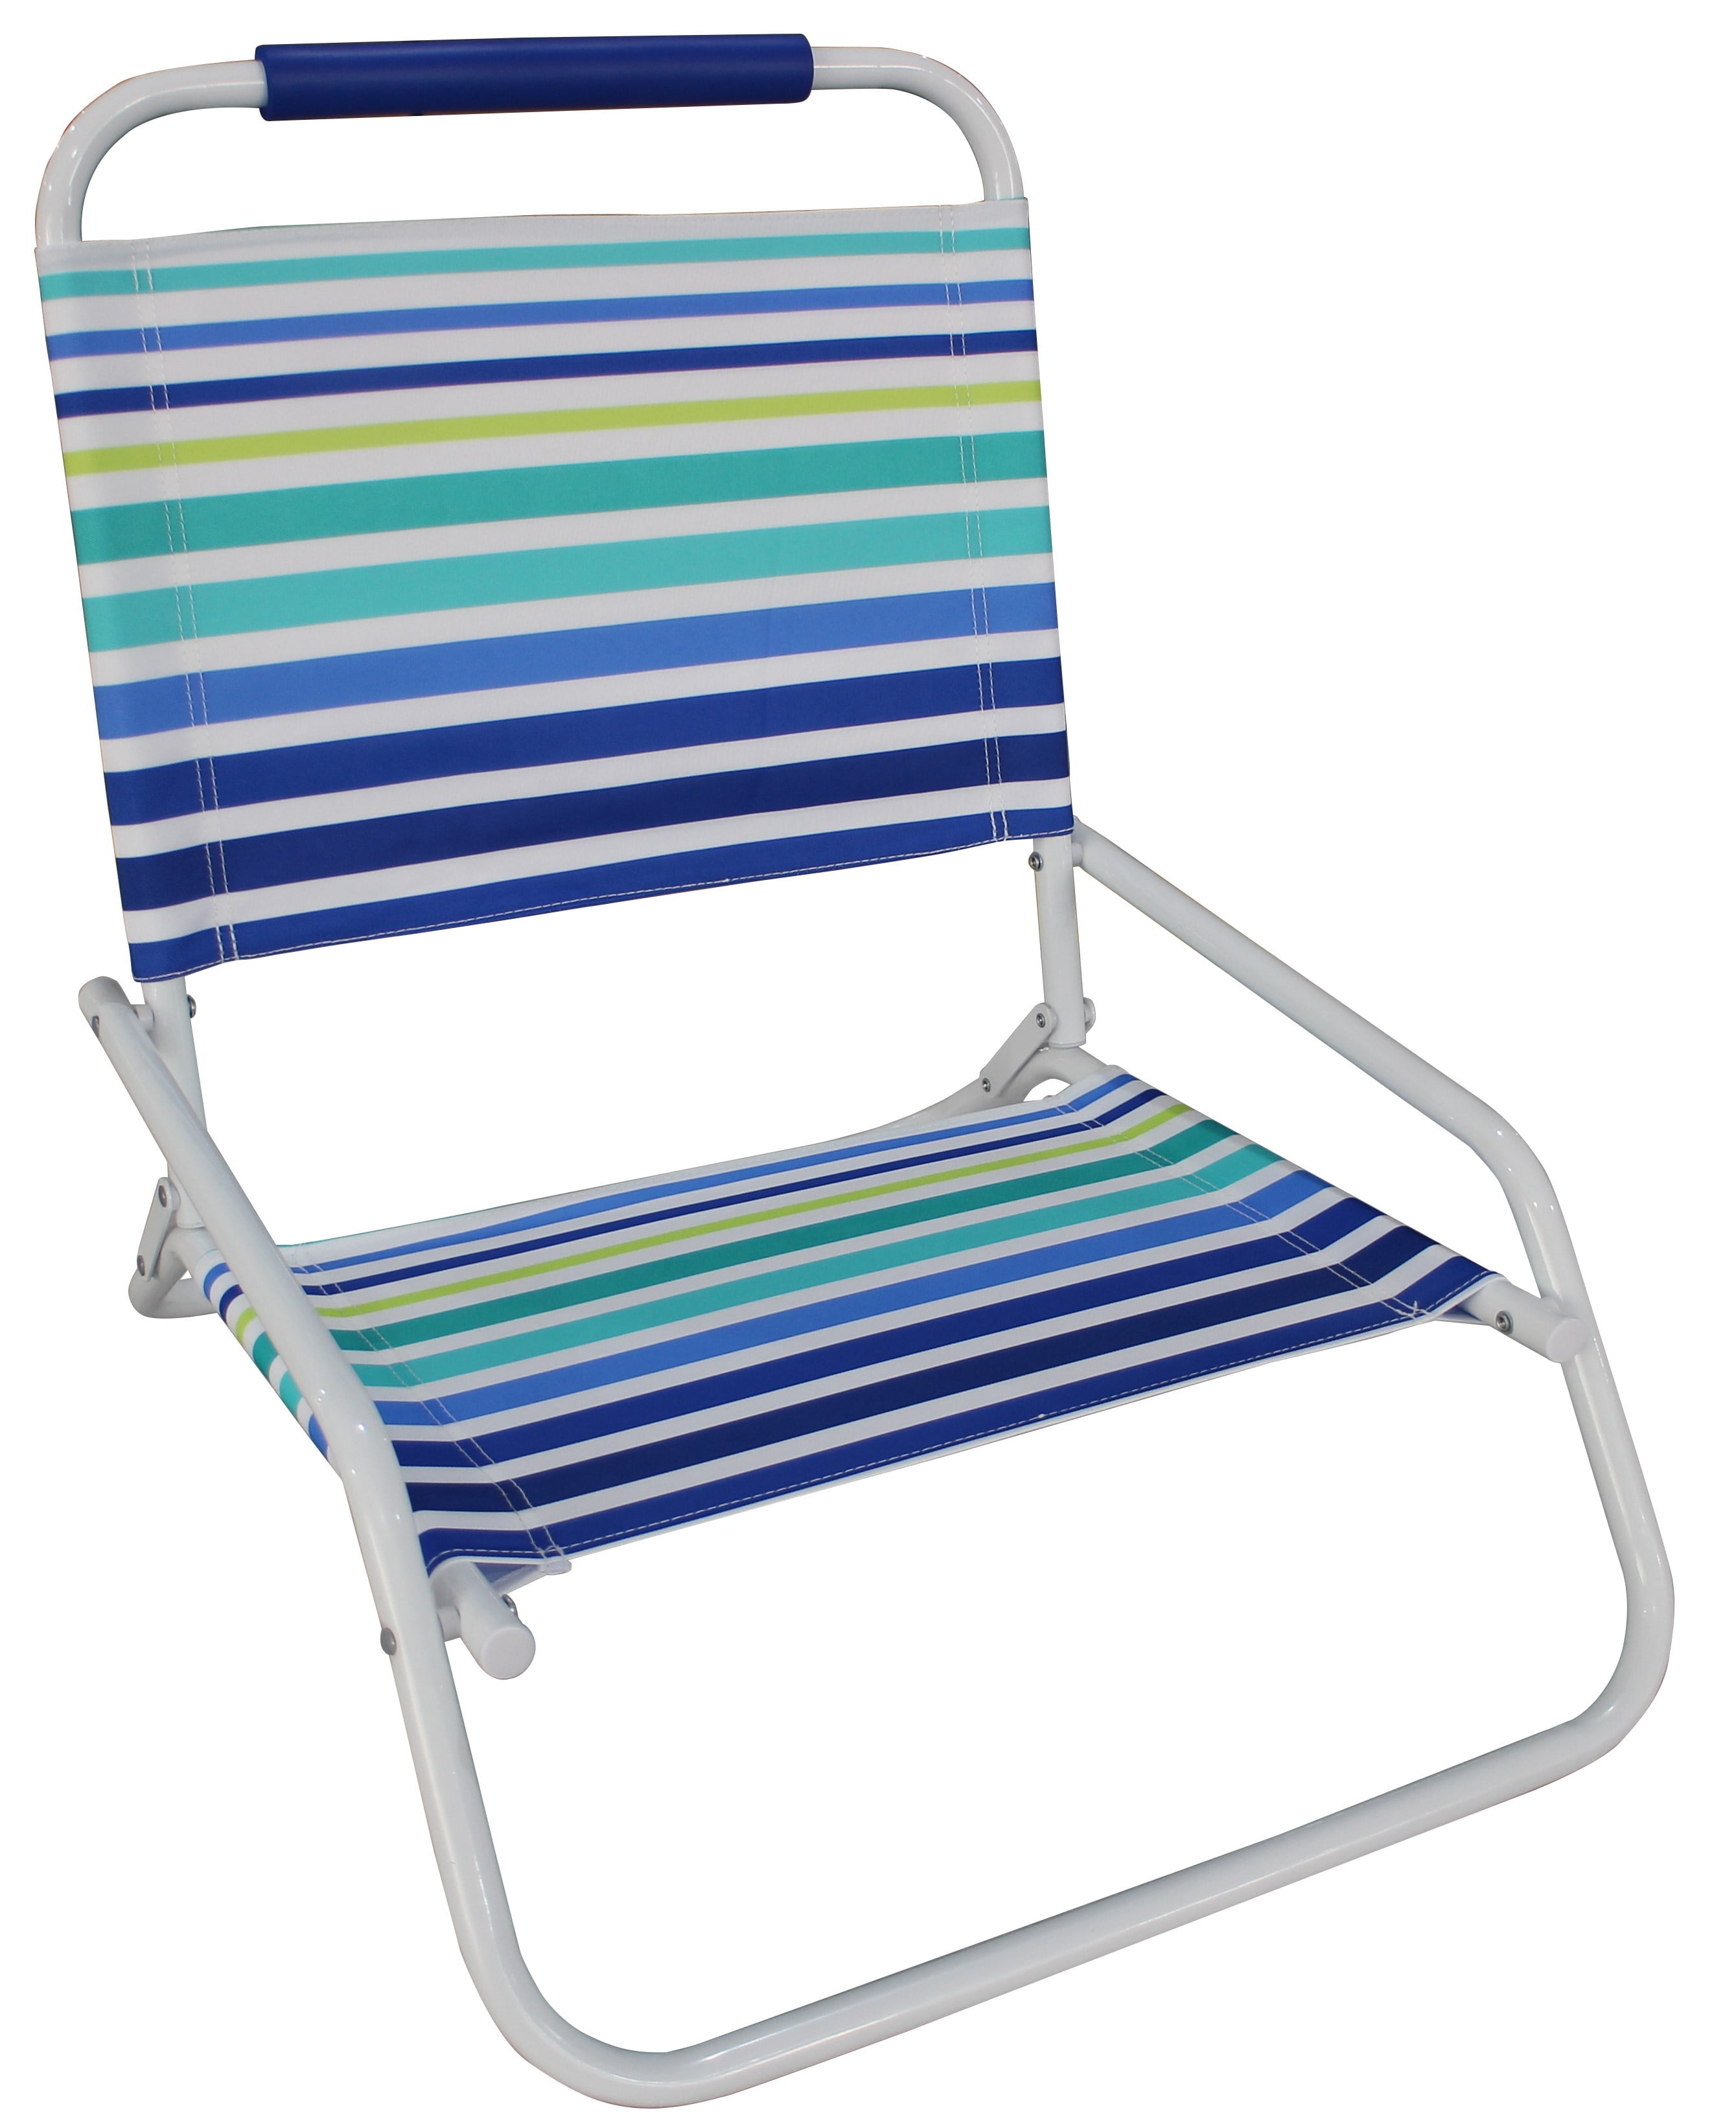 Mainstays Folding Low Profile Blue & Teal Stripe Beach Chair - Walmart.com - Walmart.com